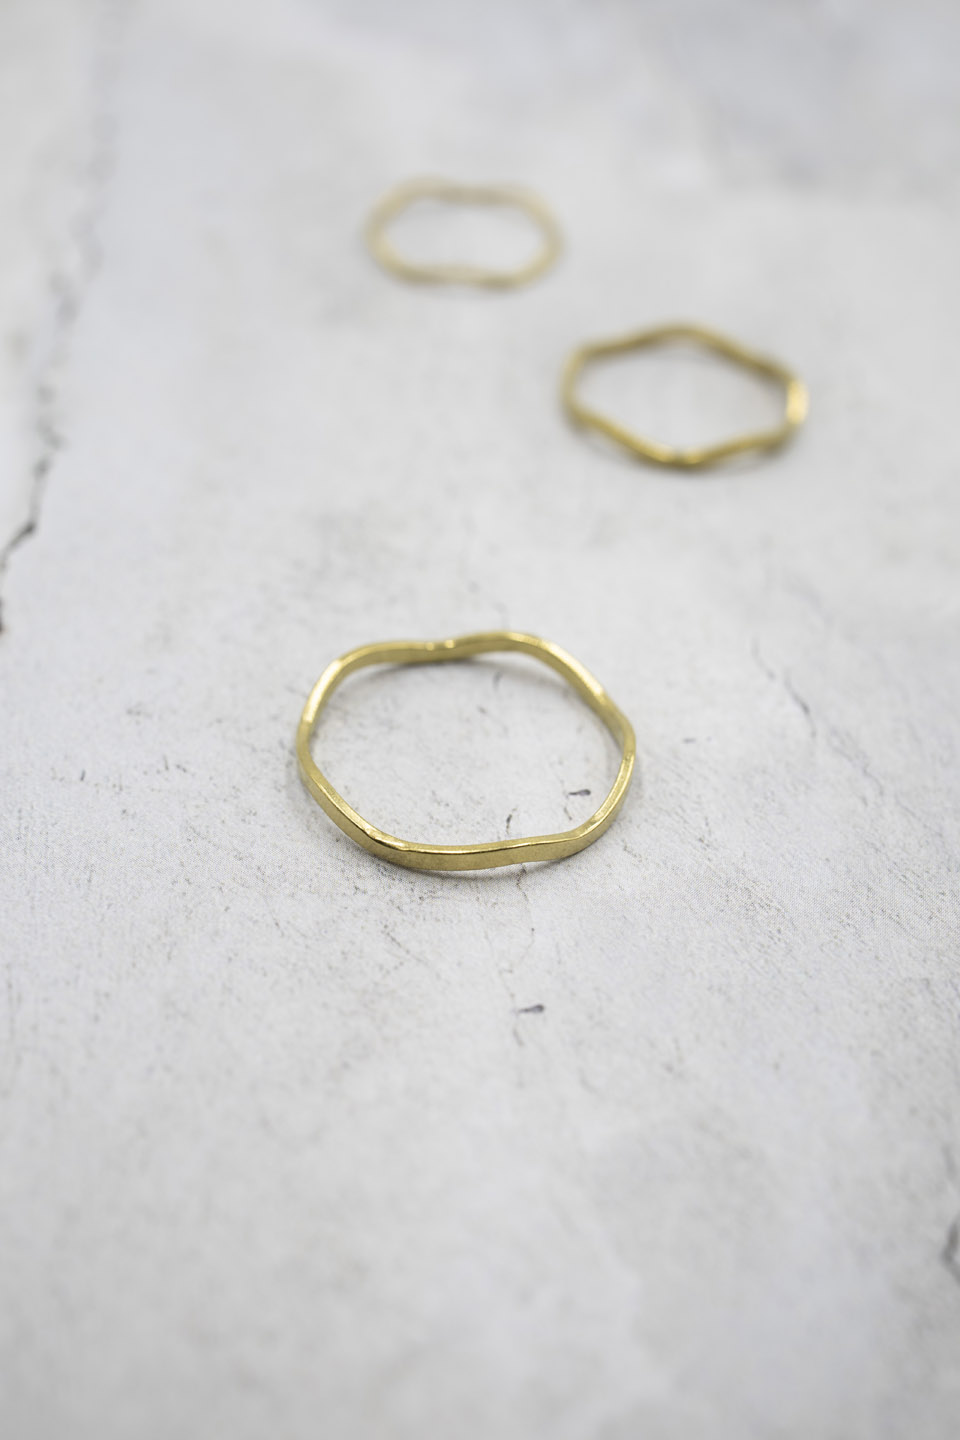 brass ring Adjustable golden ring minimalist jewelry jewelry creation 18mm